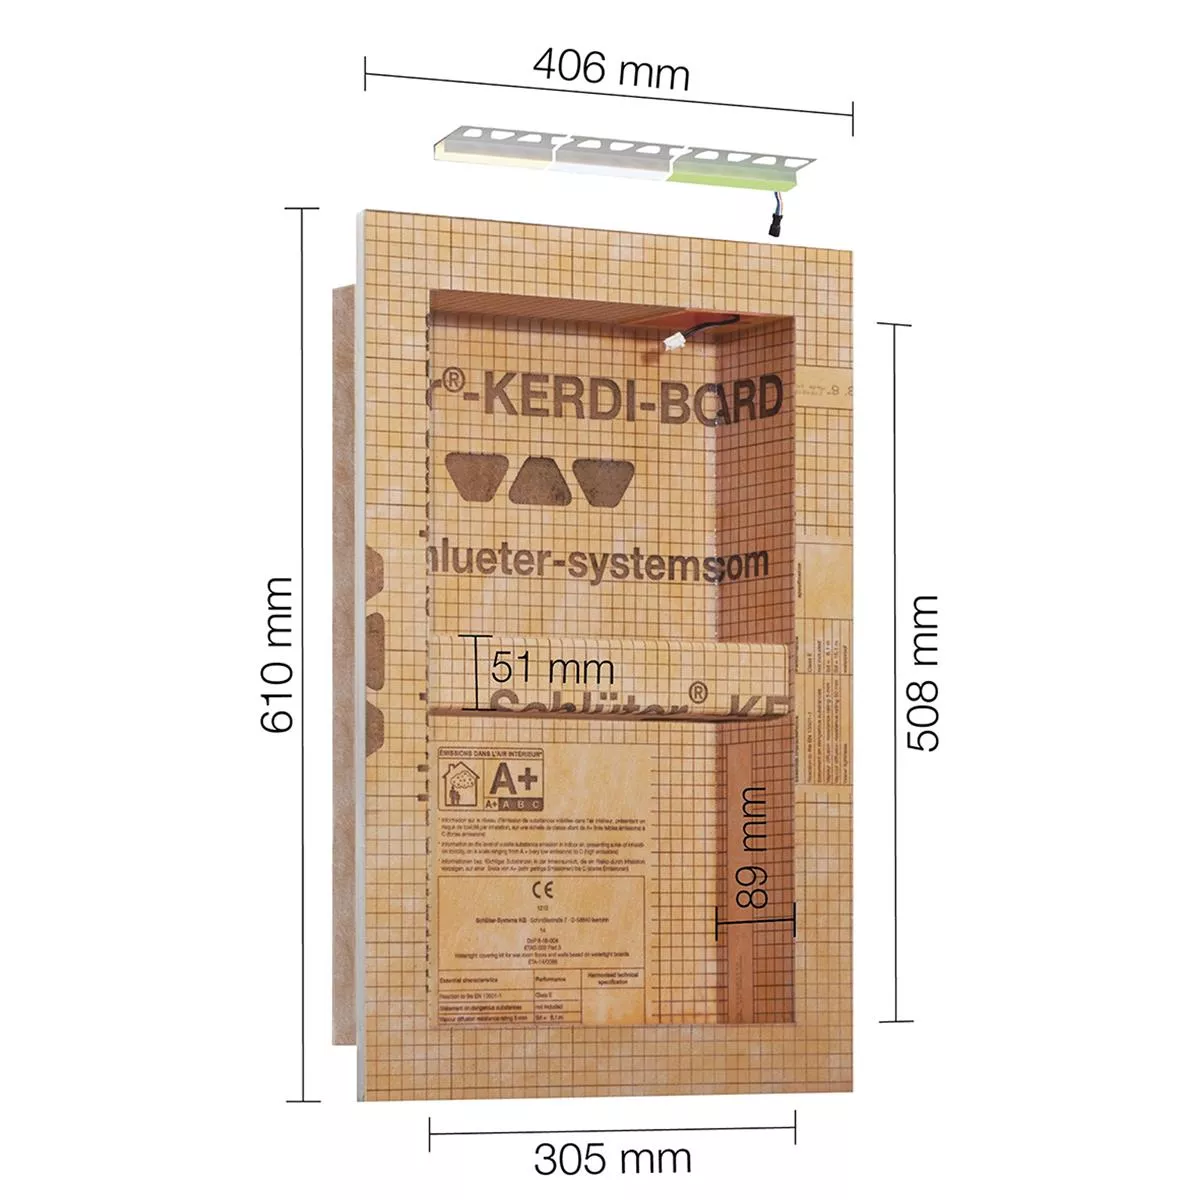 Schlüter Kerdi Board NLT σετ θέσεων με φωτισμό LED ζεστό λευκό 30,5x50,8x0,89 cm